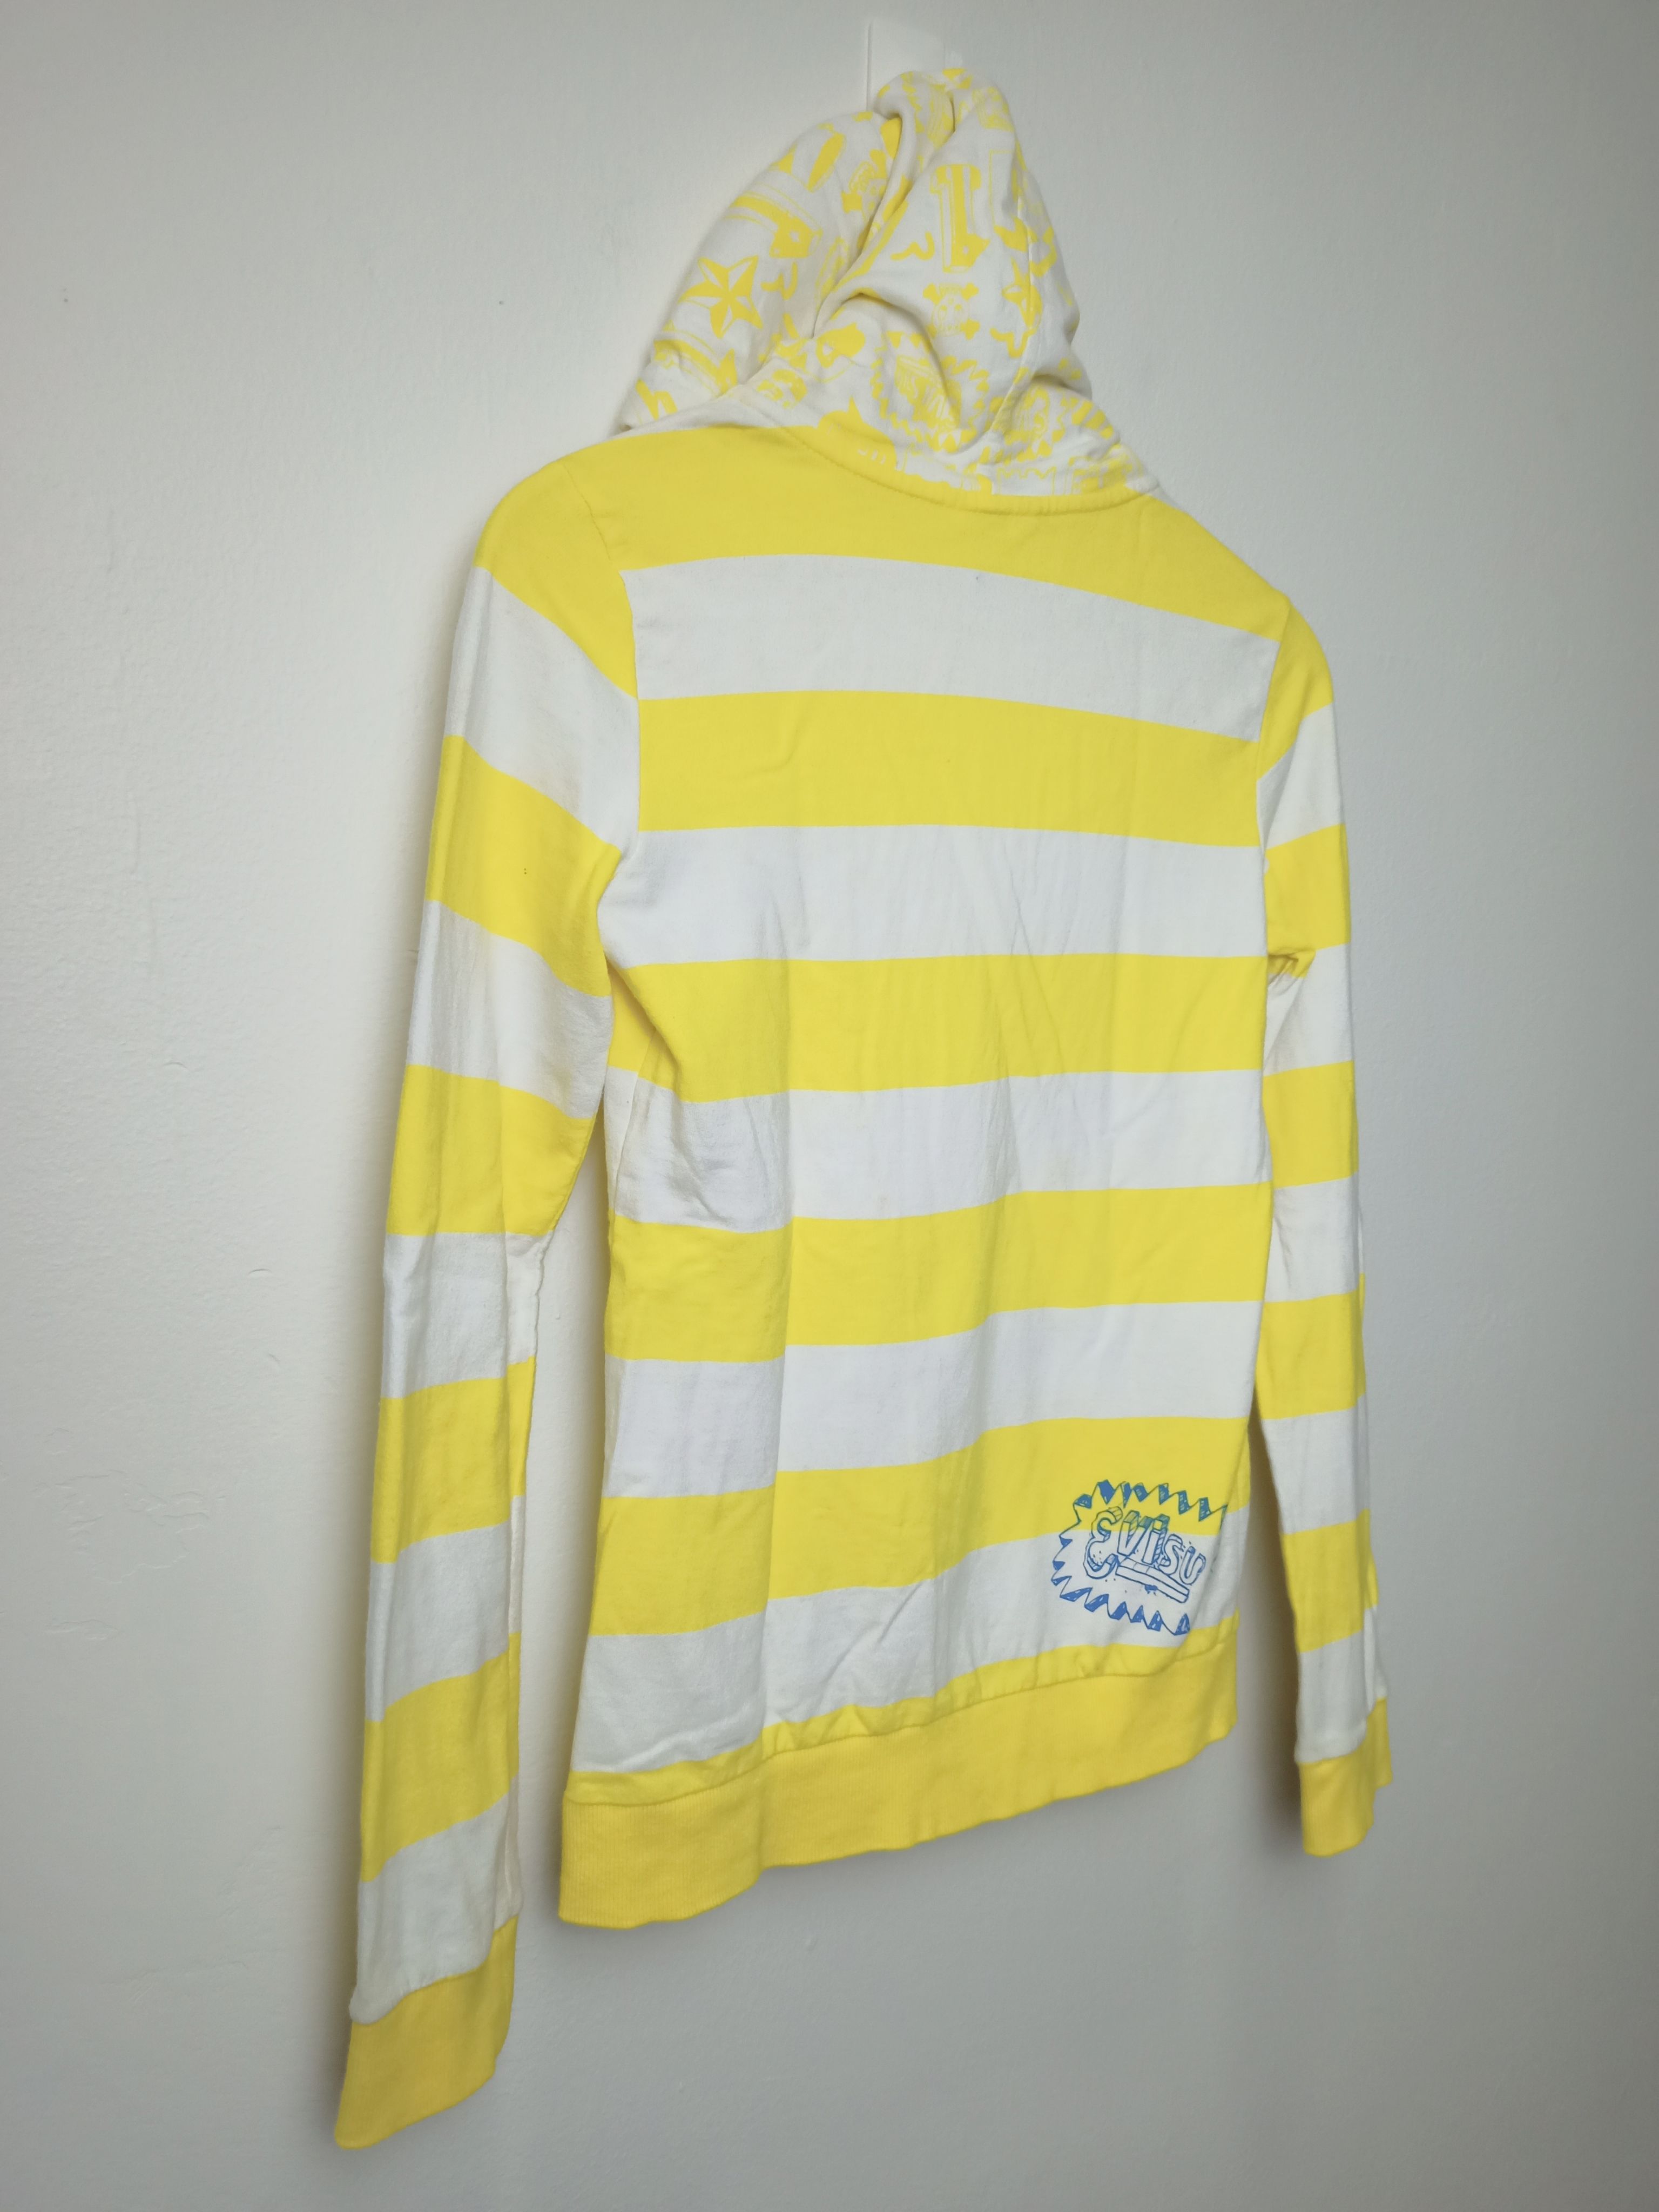 Japanese Brand Evisu Sweetshirt Hoodies Size S / US 4 / IT 40 - 8 Thumbnail